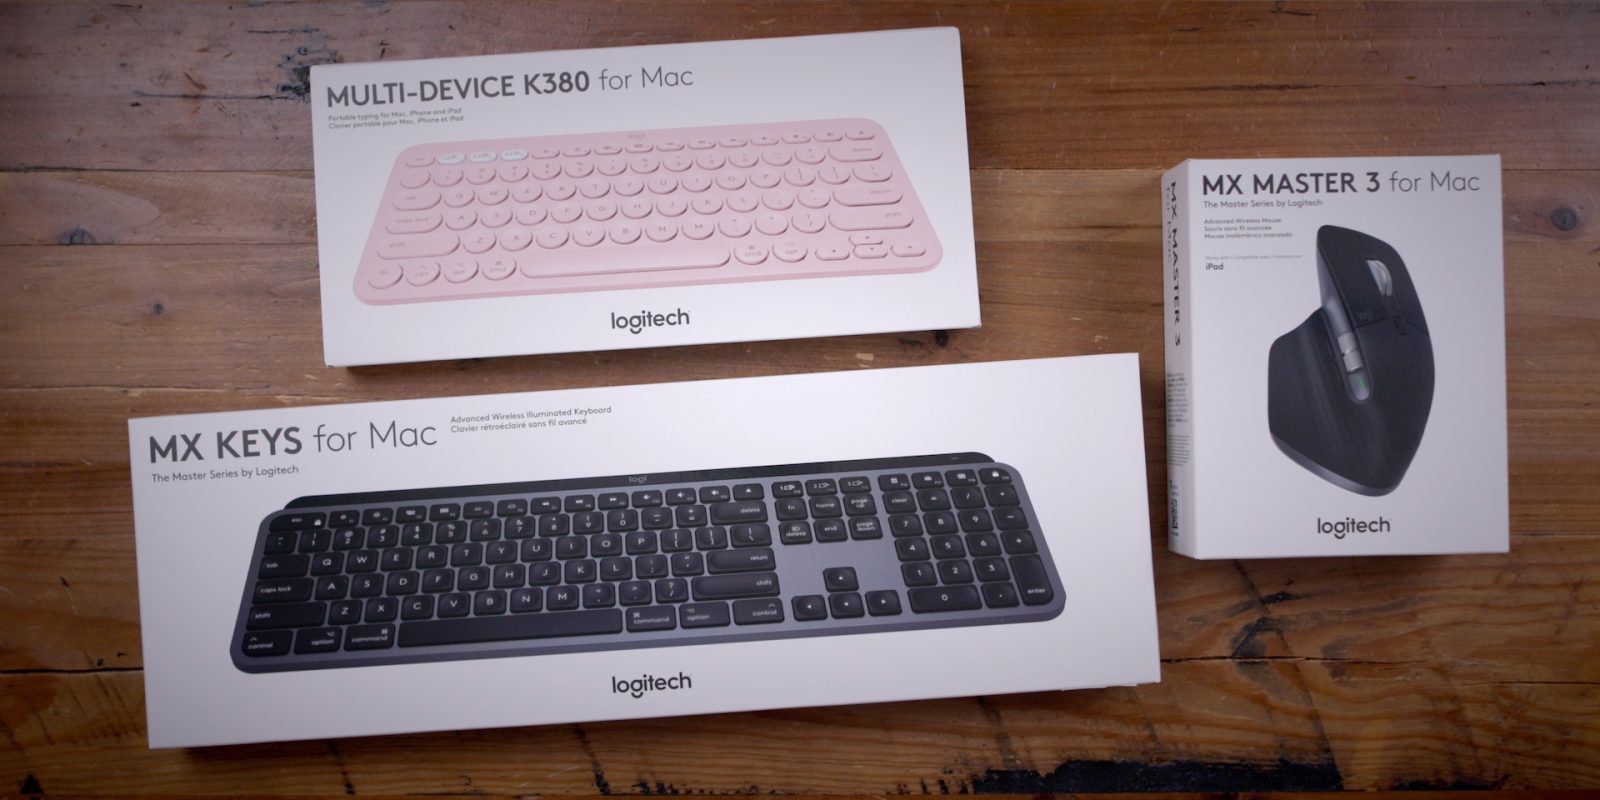 Hands-on: Logitech MX Master 3, MX Keys, and K380 keyboard - 9to5Mac